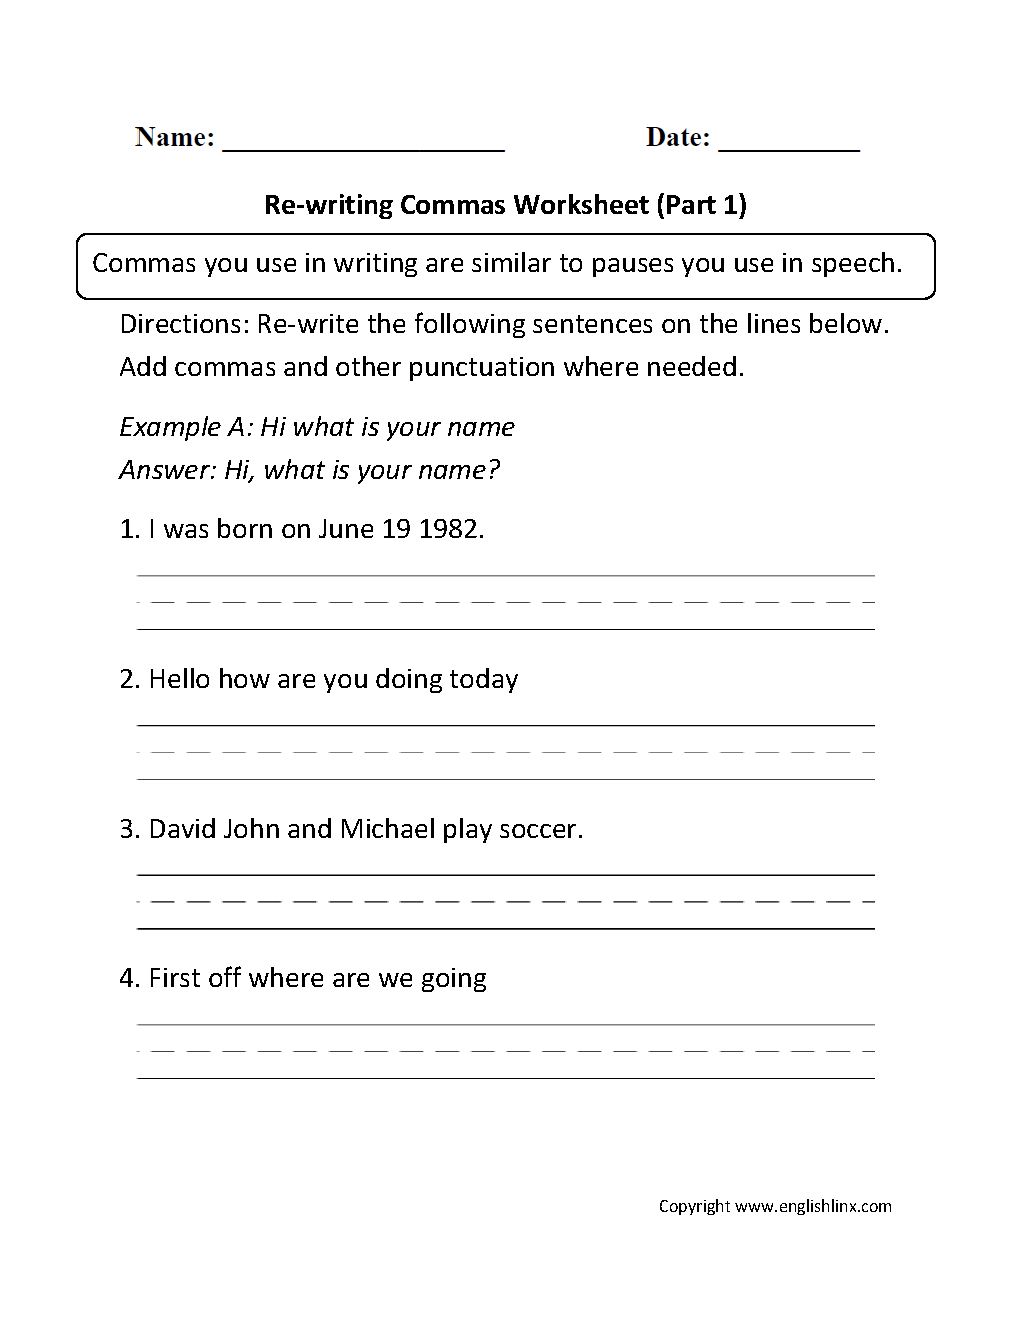 comma-practice-worksheet-db-excel